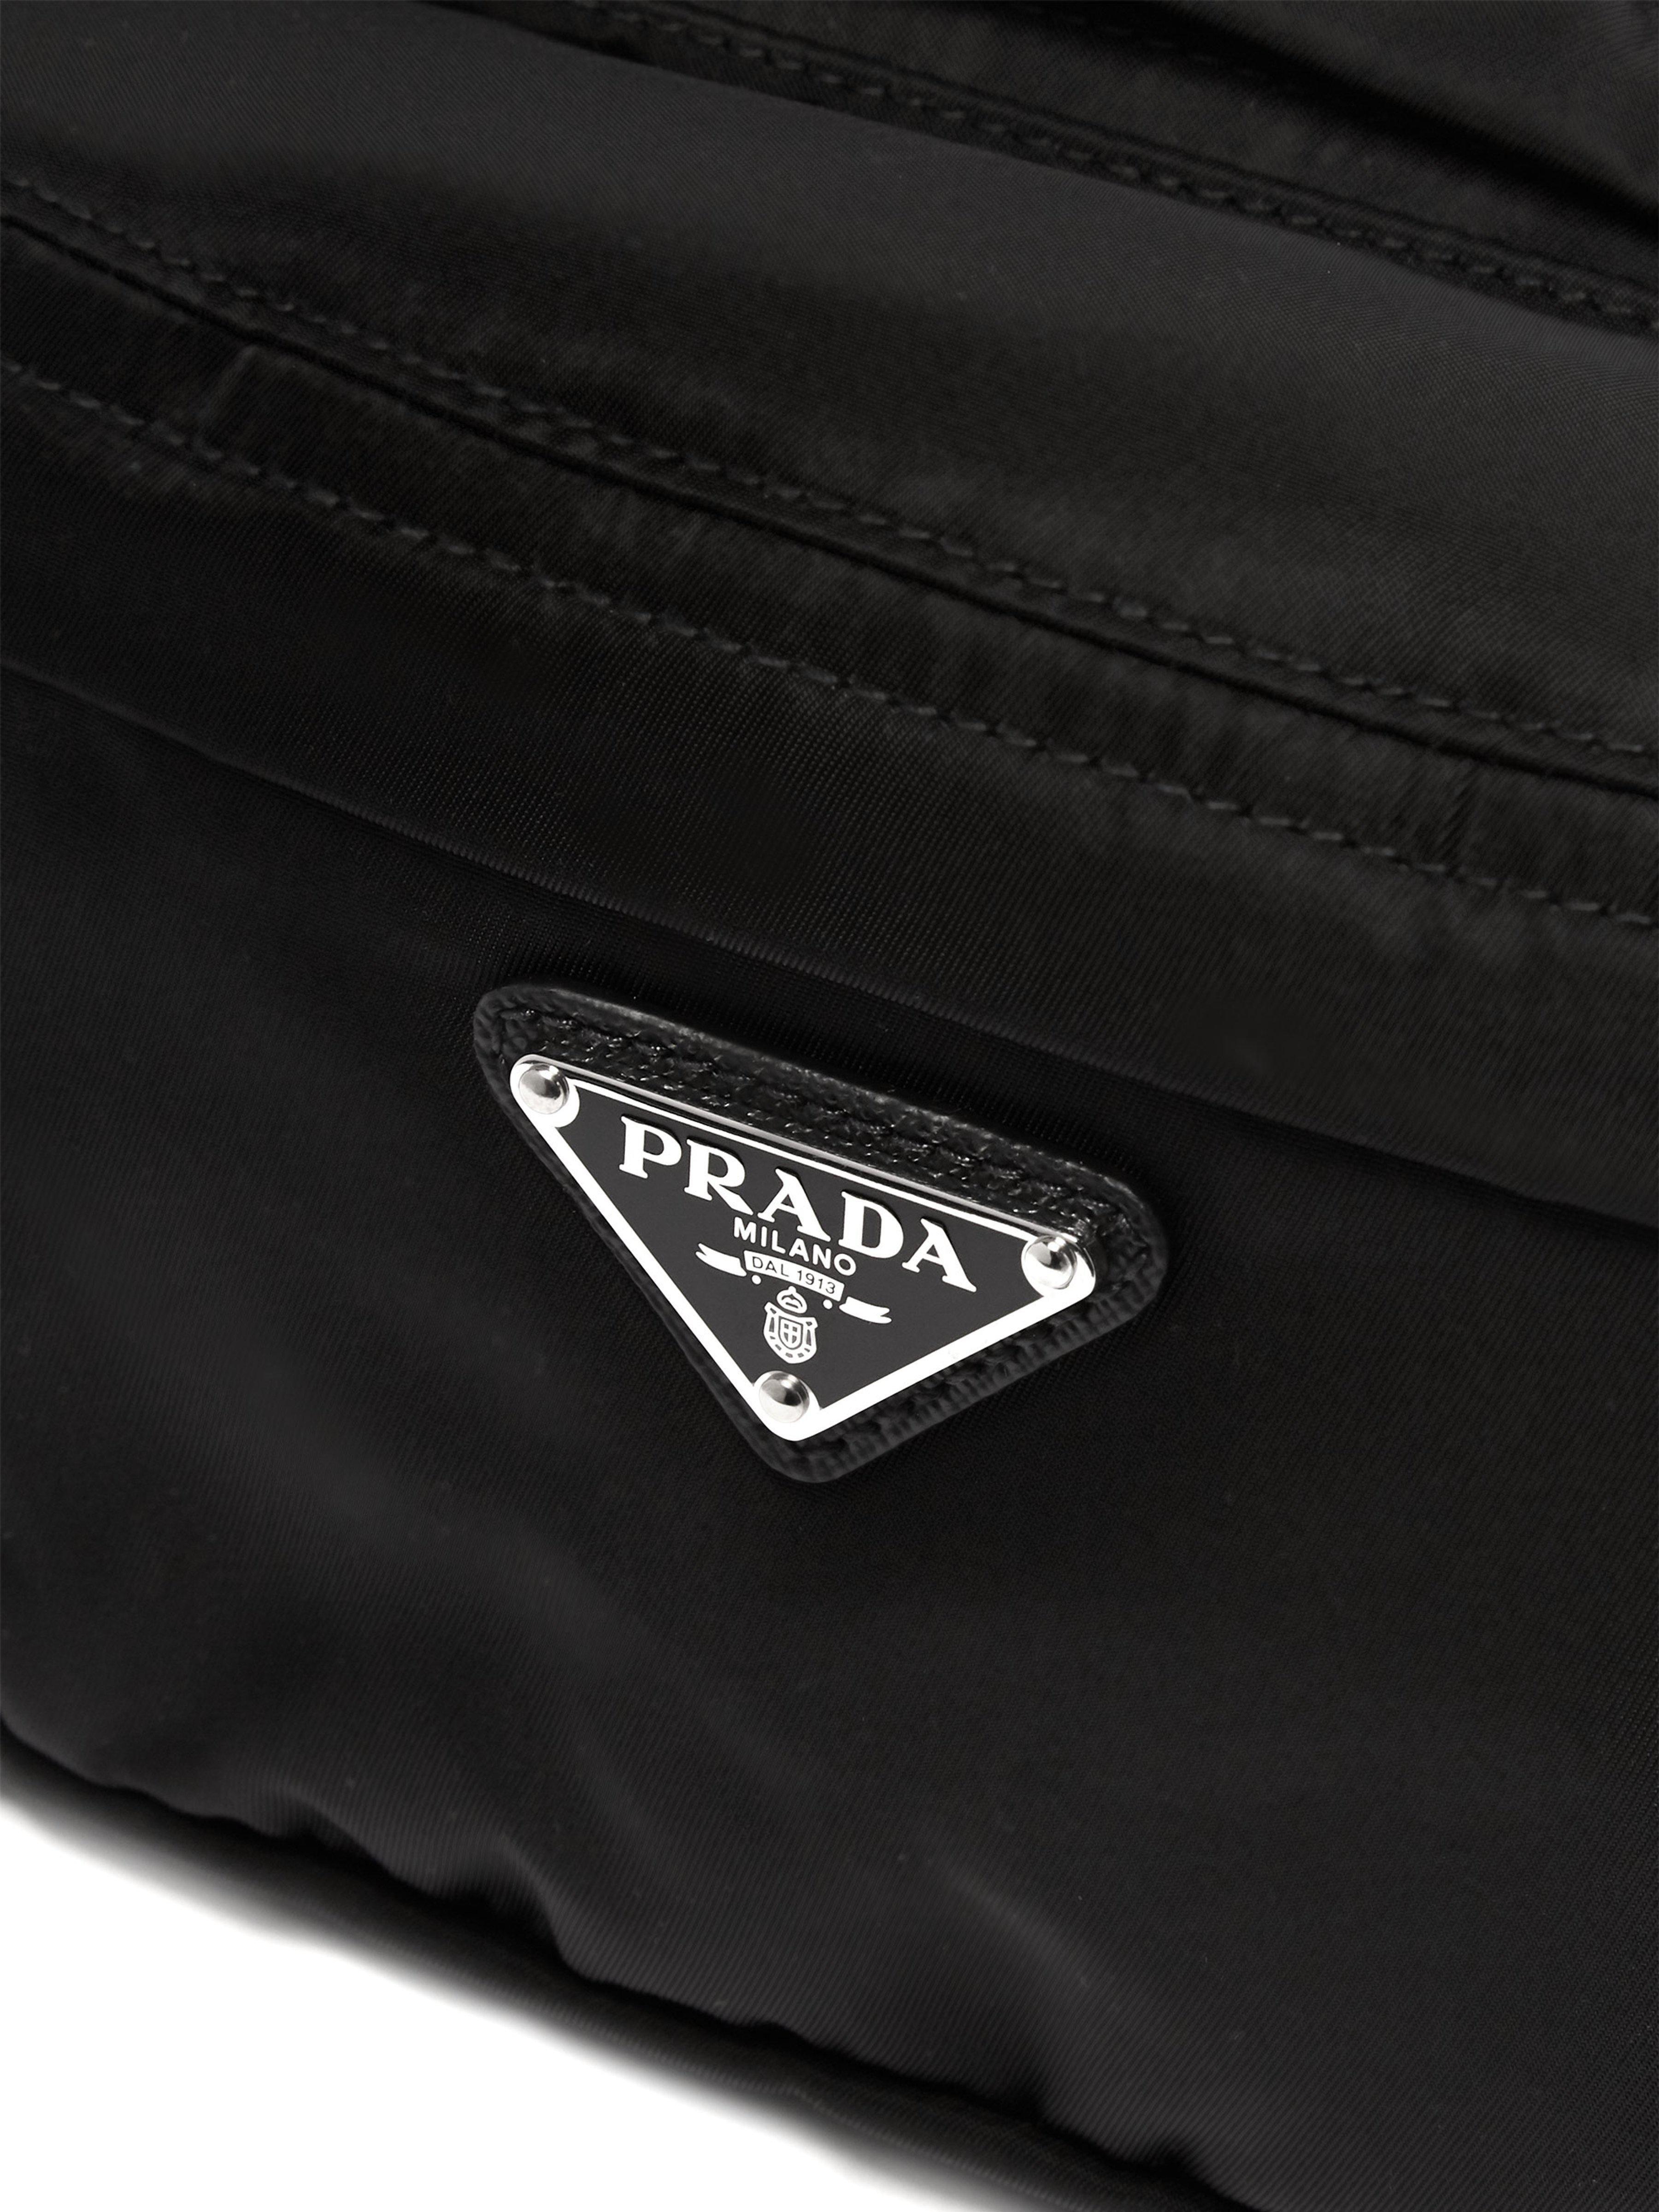 Black and White Triangle Logo - Prada Triangle Logo Belt Bag in Black for Men - Lyst